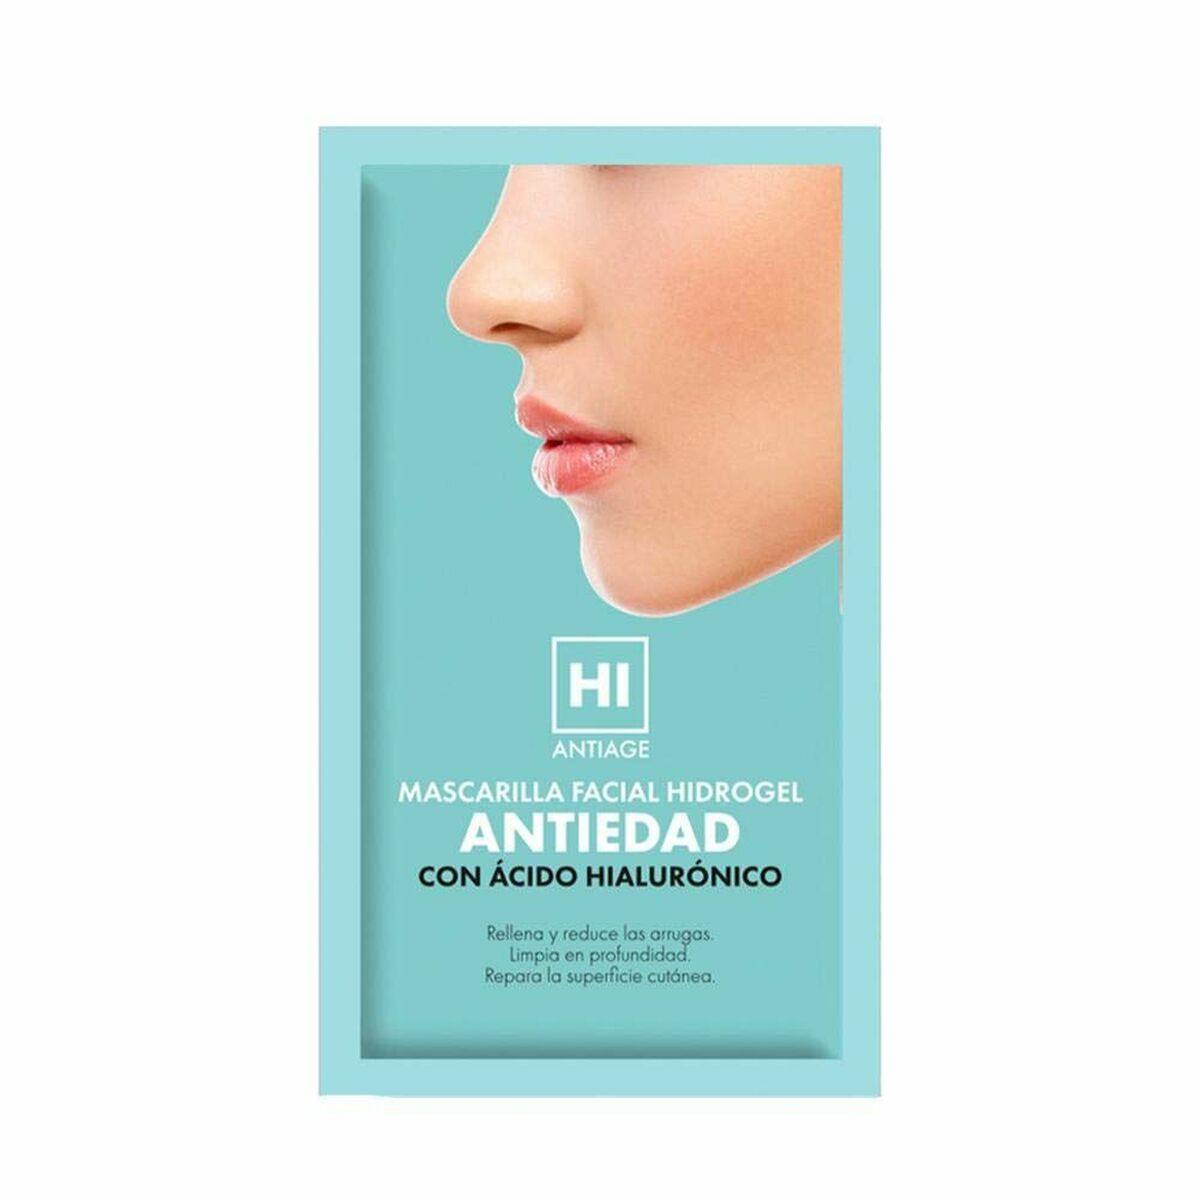 Masque facial Hydratant Hi Antiage Hidrogel Redumodel (10 ml)